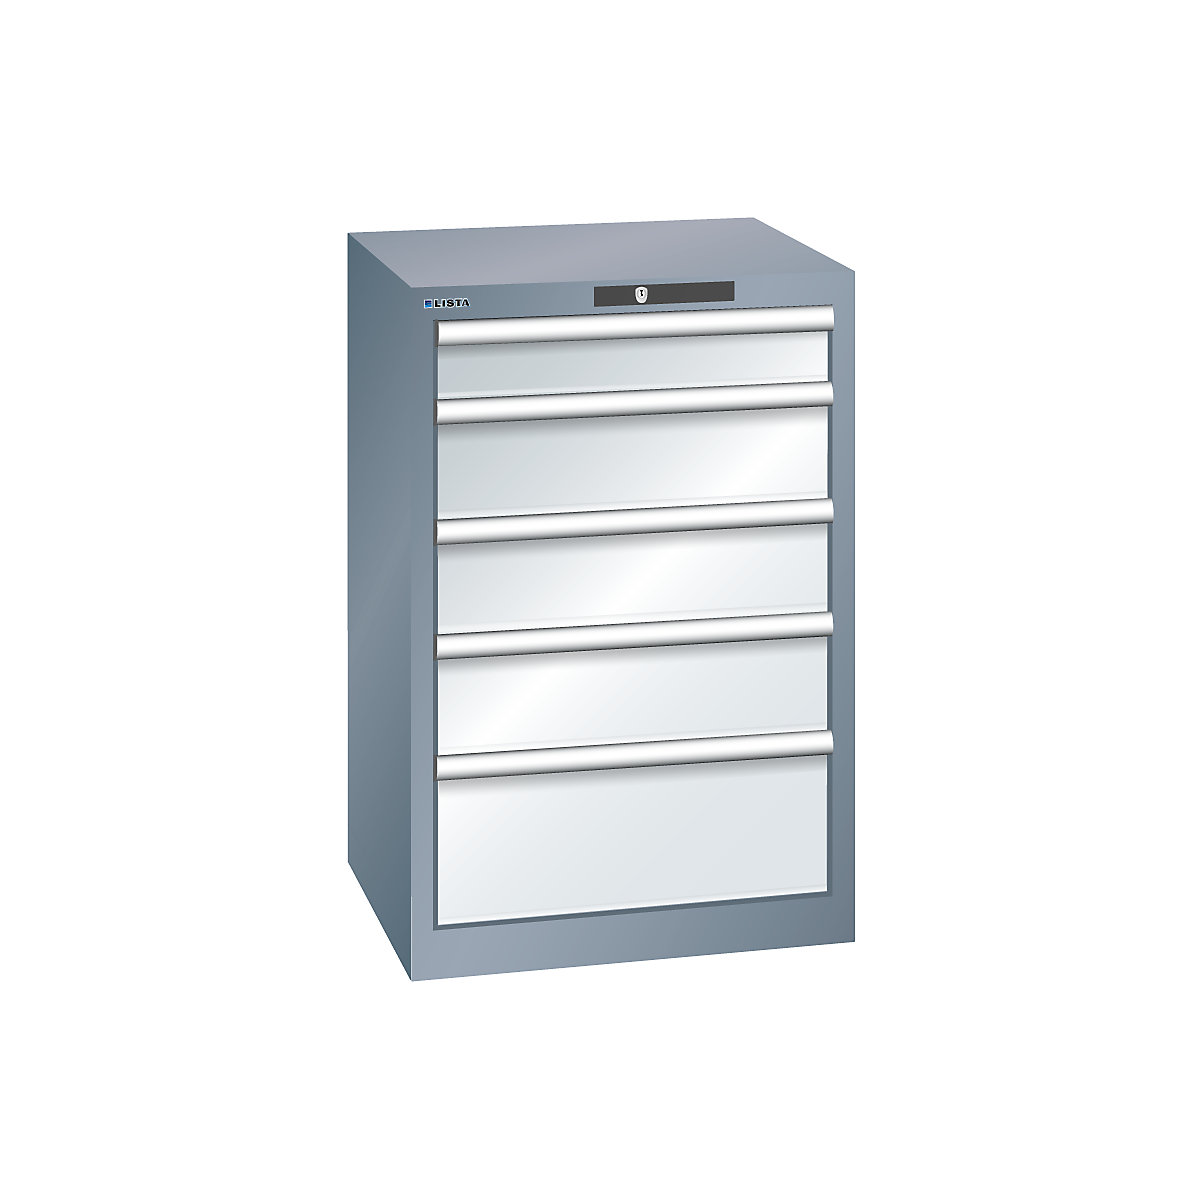 Drawer cupboard, 5 drawers – LISTA, WxDxH 564 x 572 x 850 mm, grey metallic / light grey-4